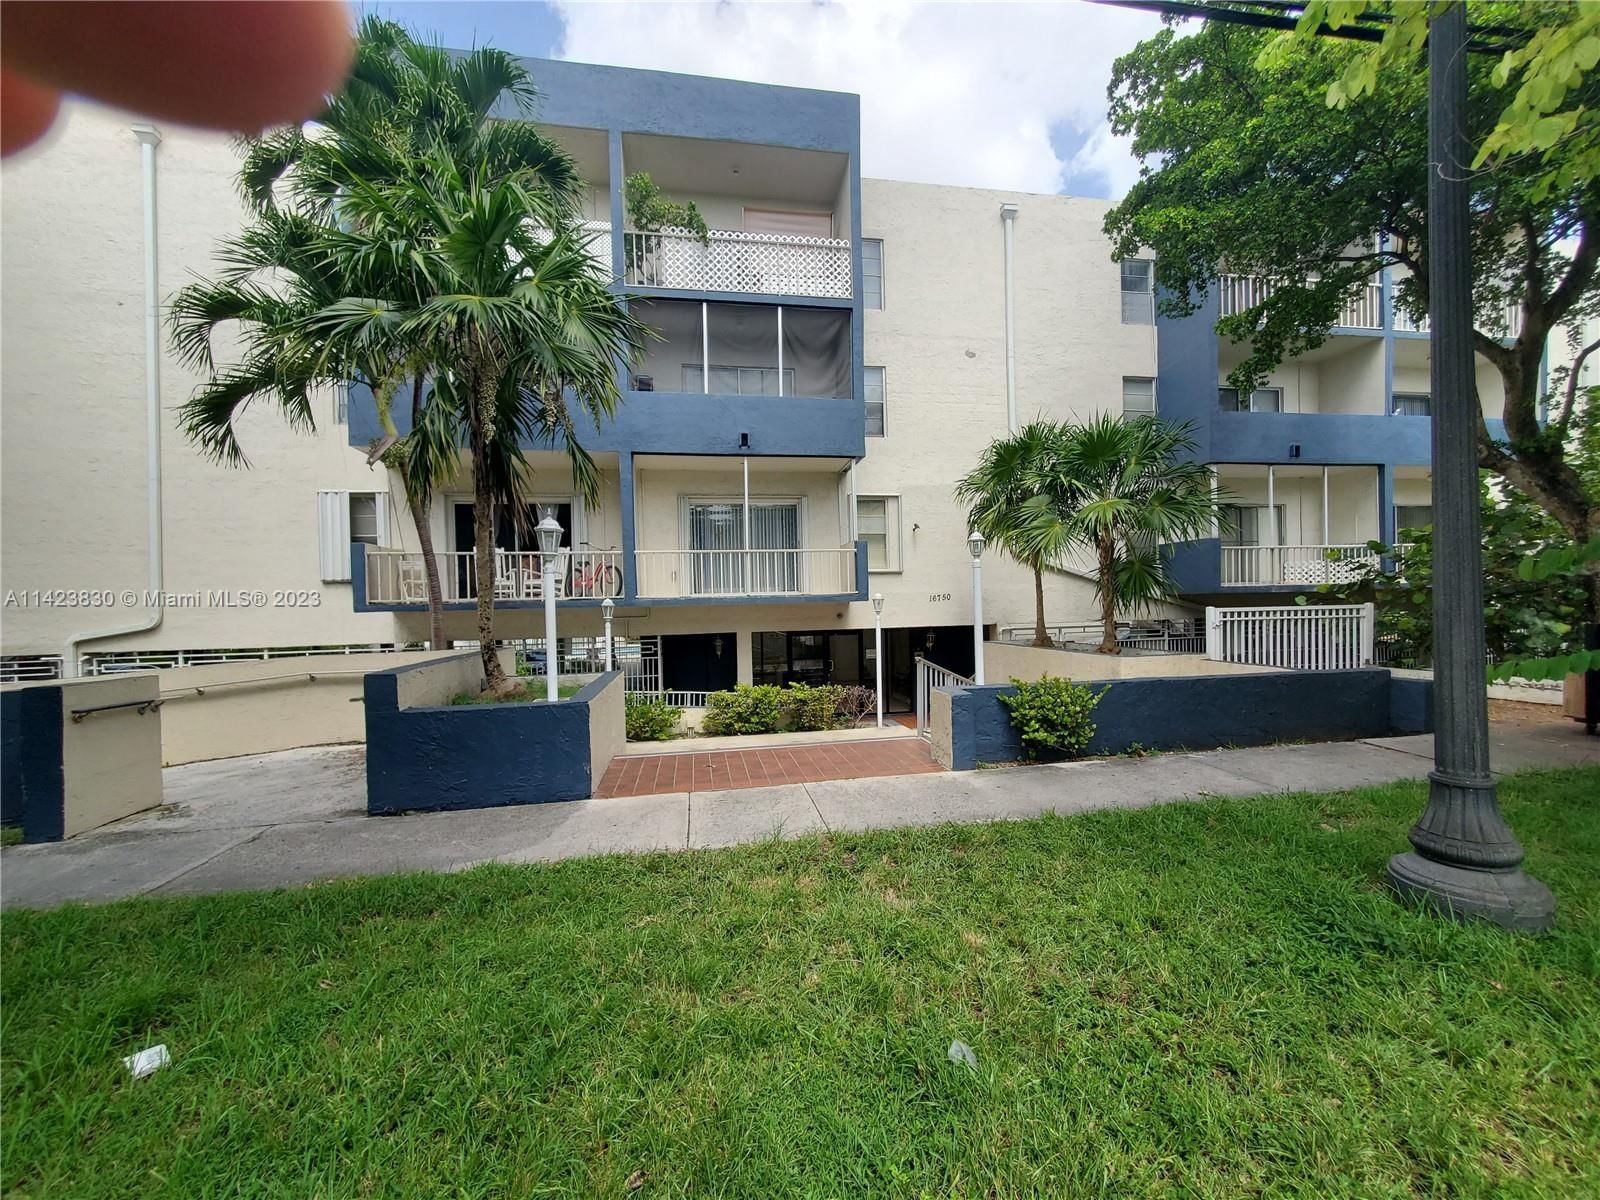 Real estate property located at 16750 10th Ave #312, Miami-Dade County, North Miami Beach, FL